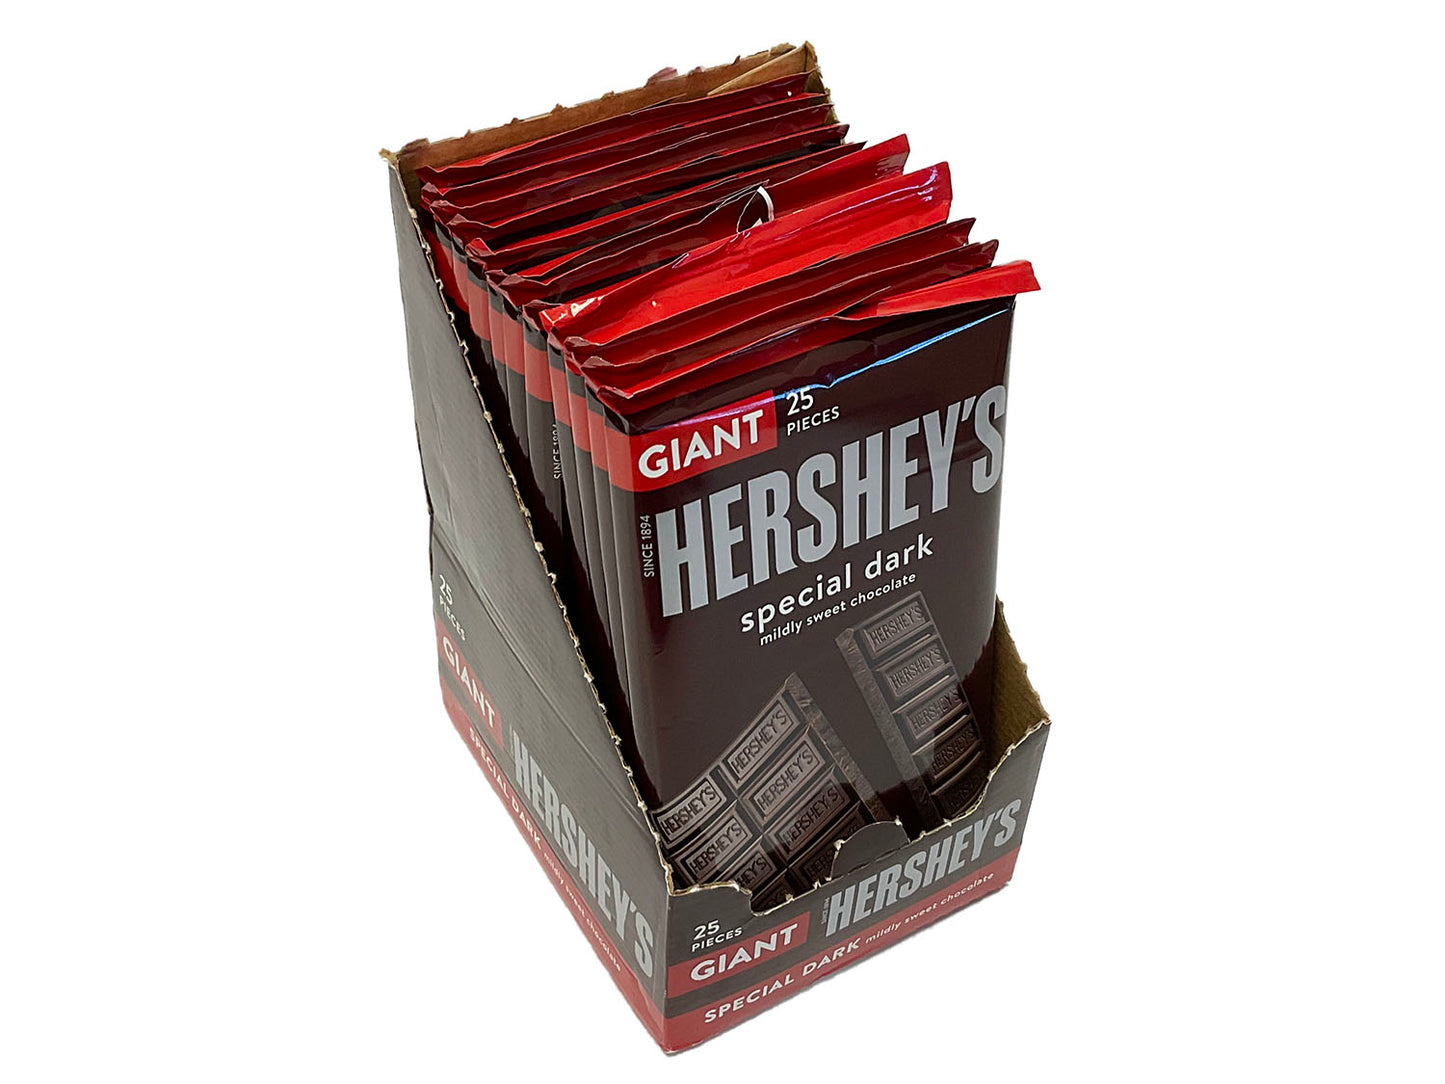 Hershey's Giant 7.56 oz Special Dark Chocolate Bar - display box of 12